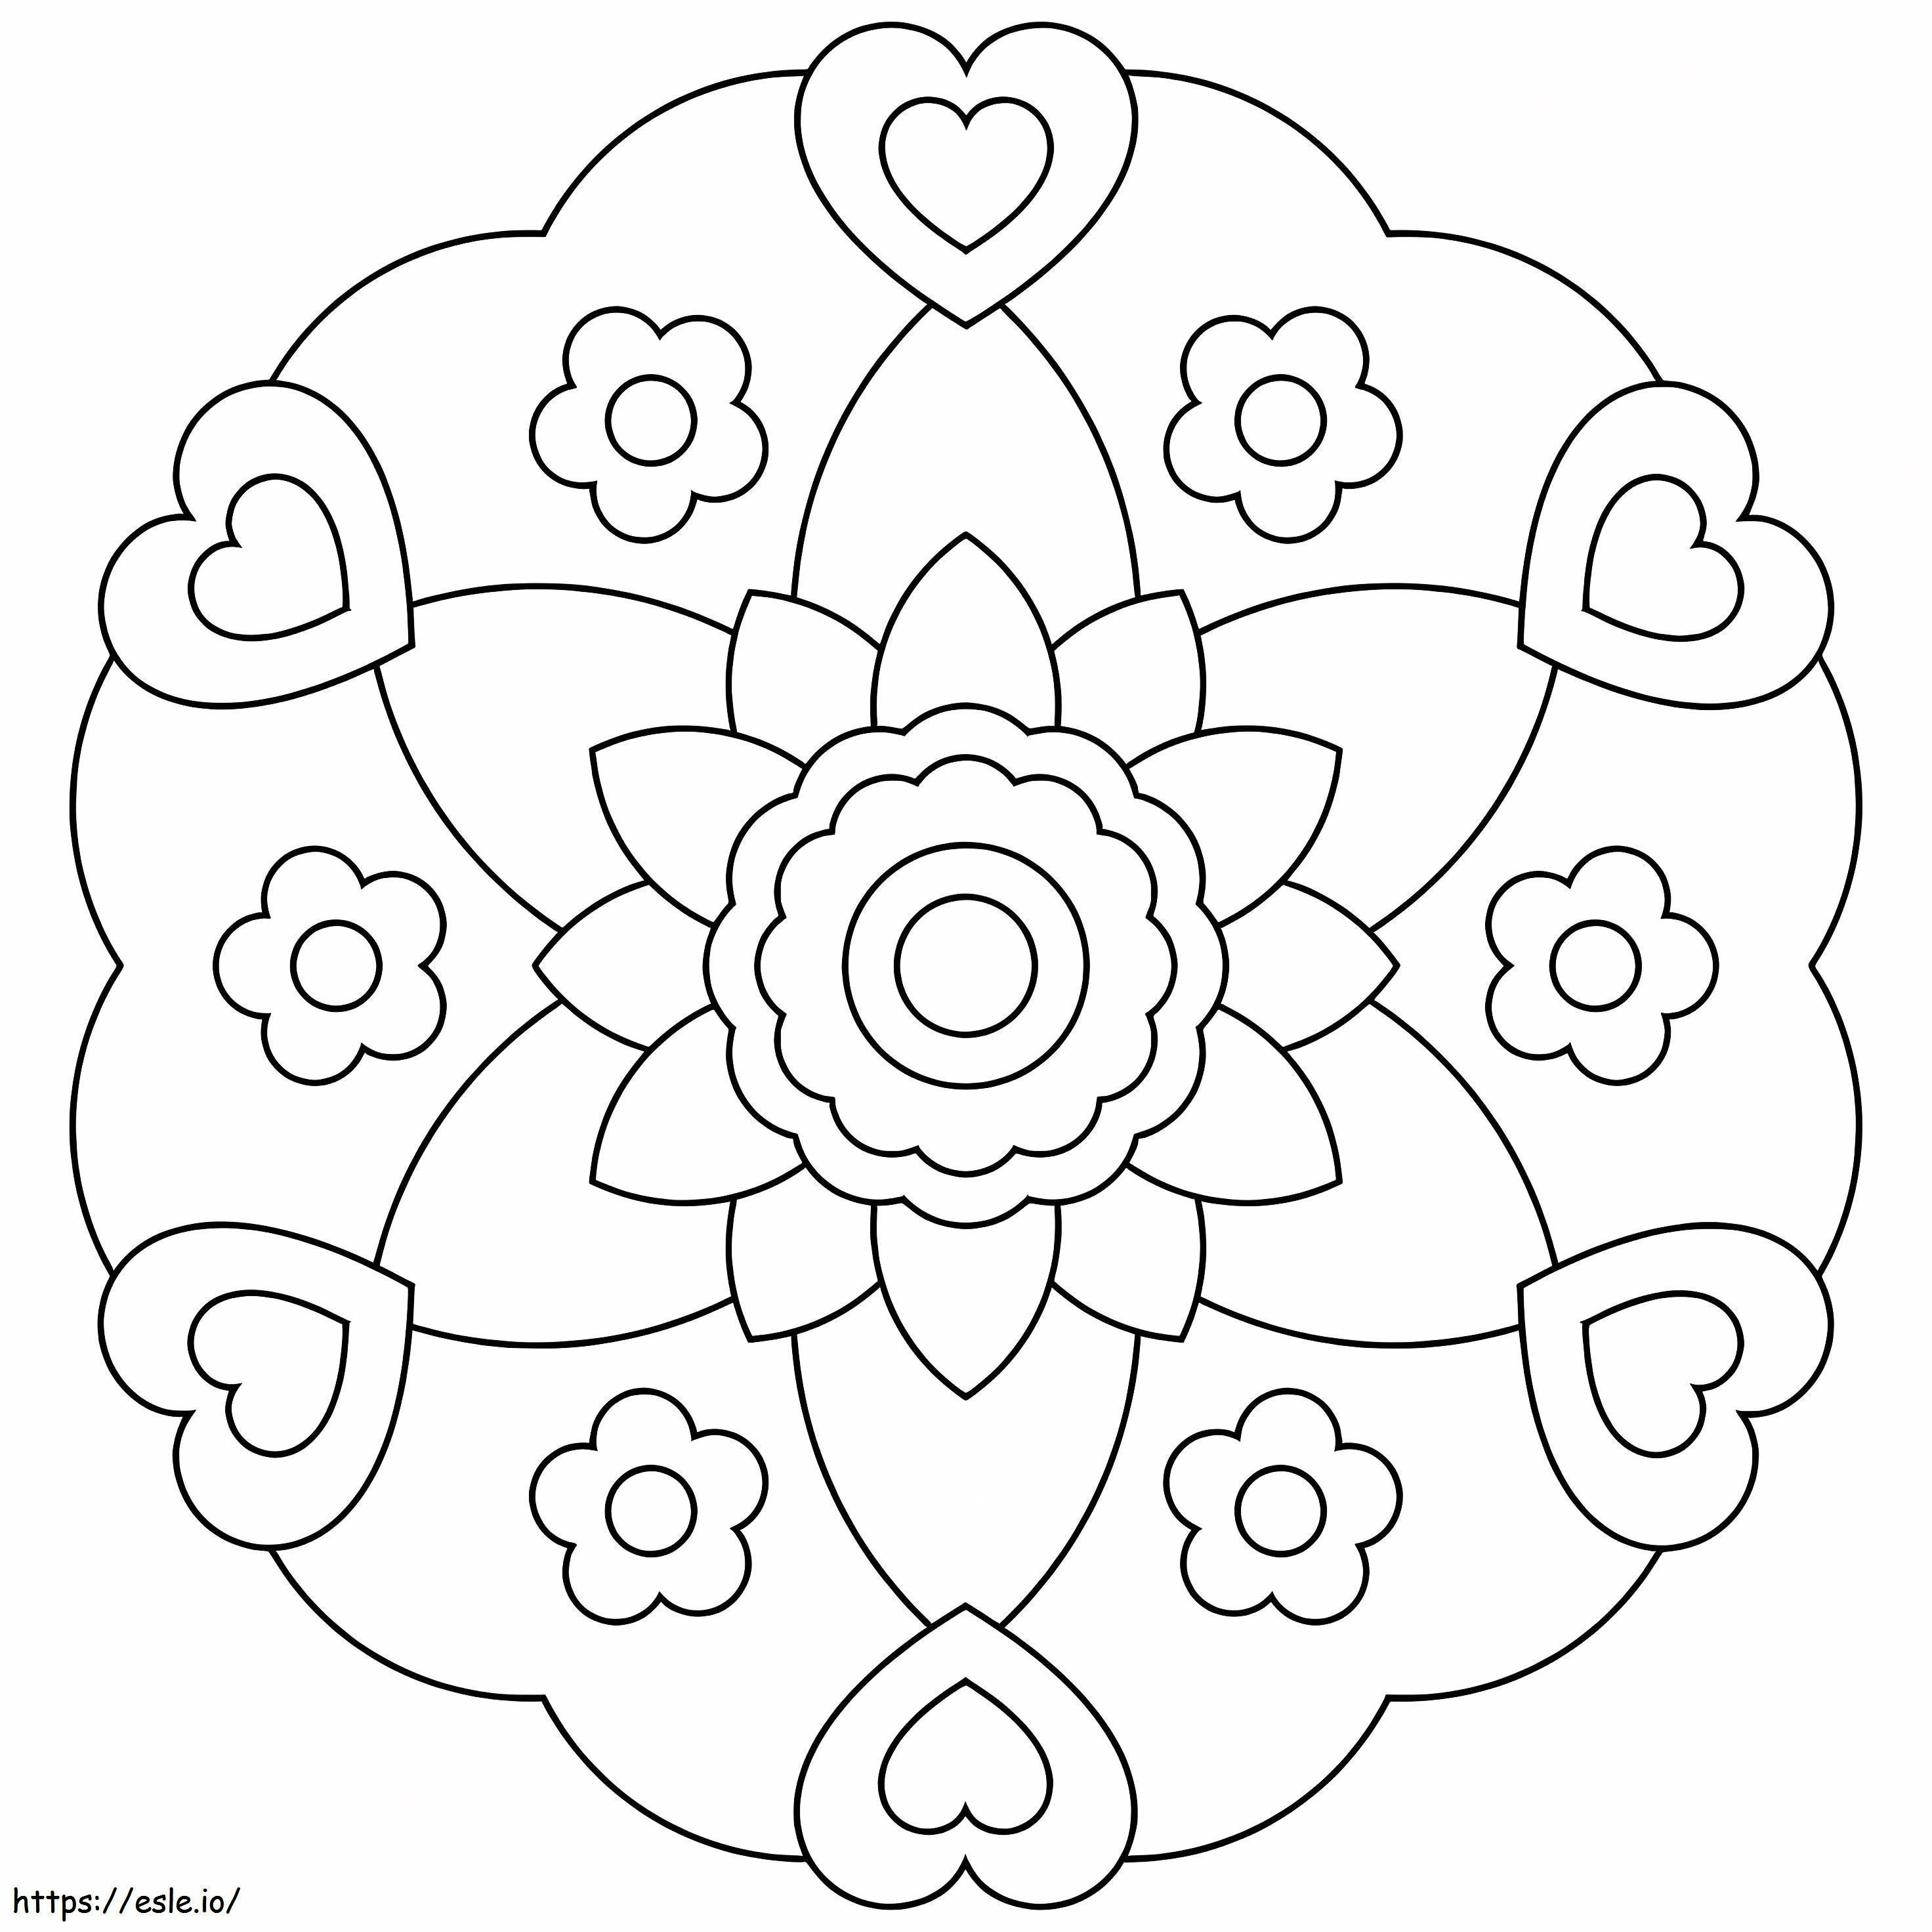 Easy Spring Mandala coloring page